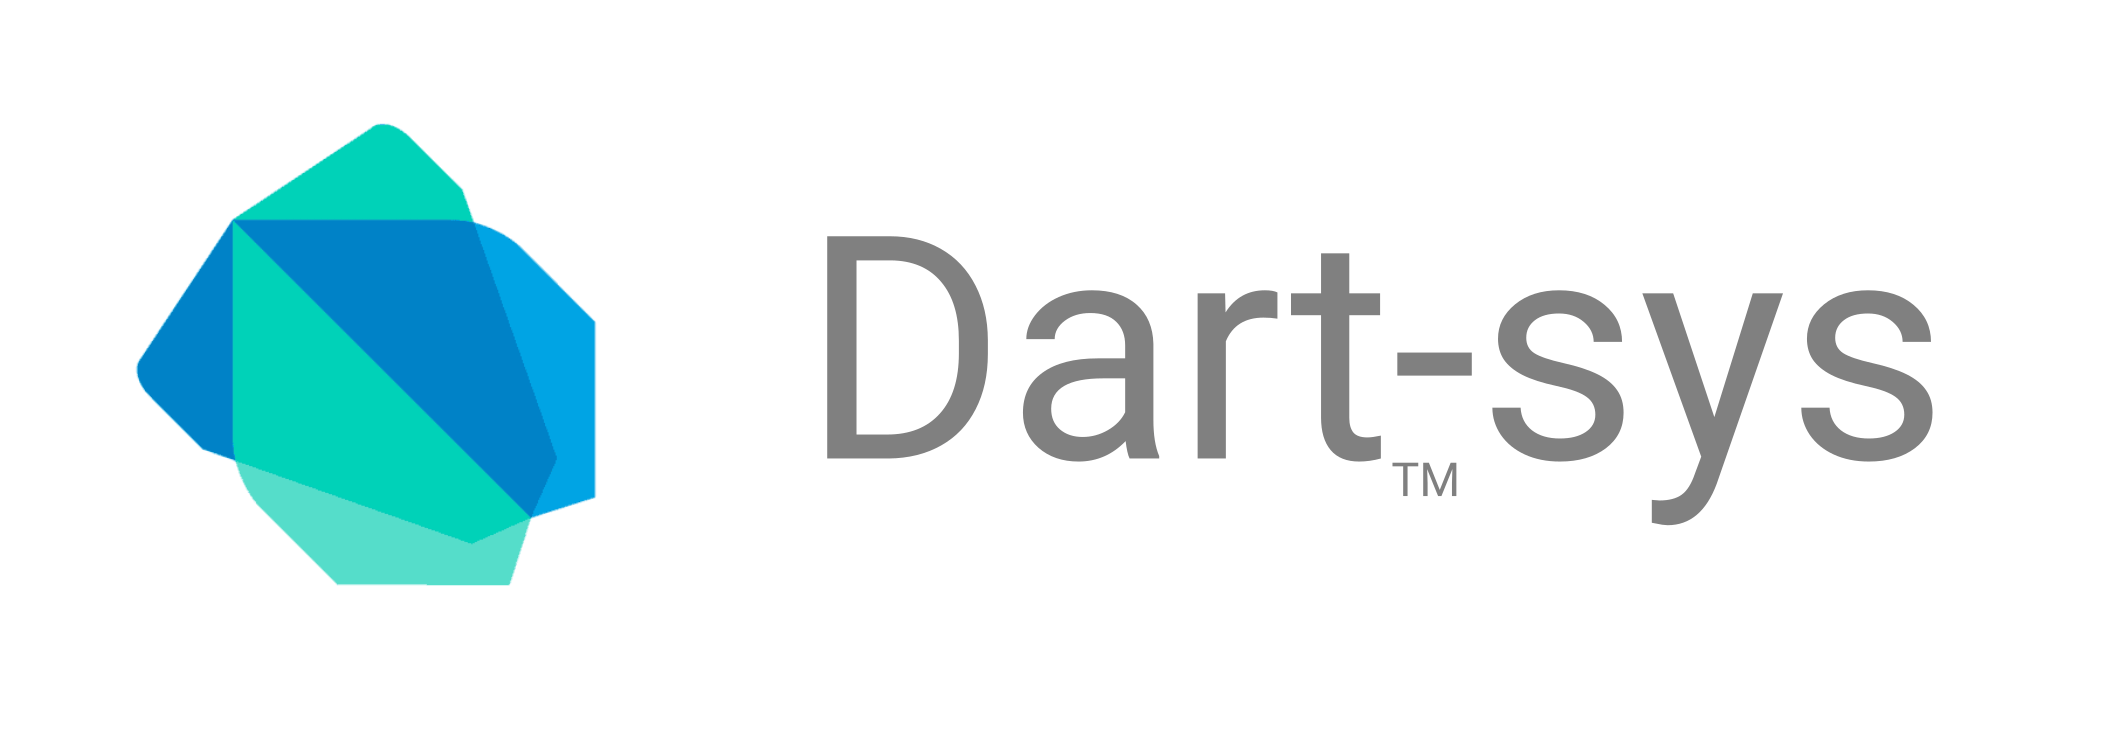 Dart-sys brand header